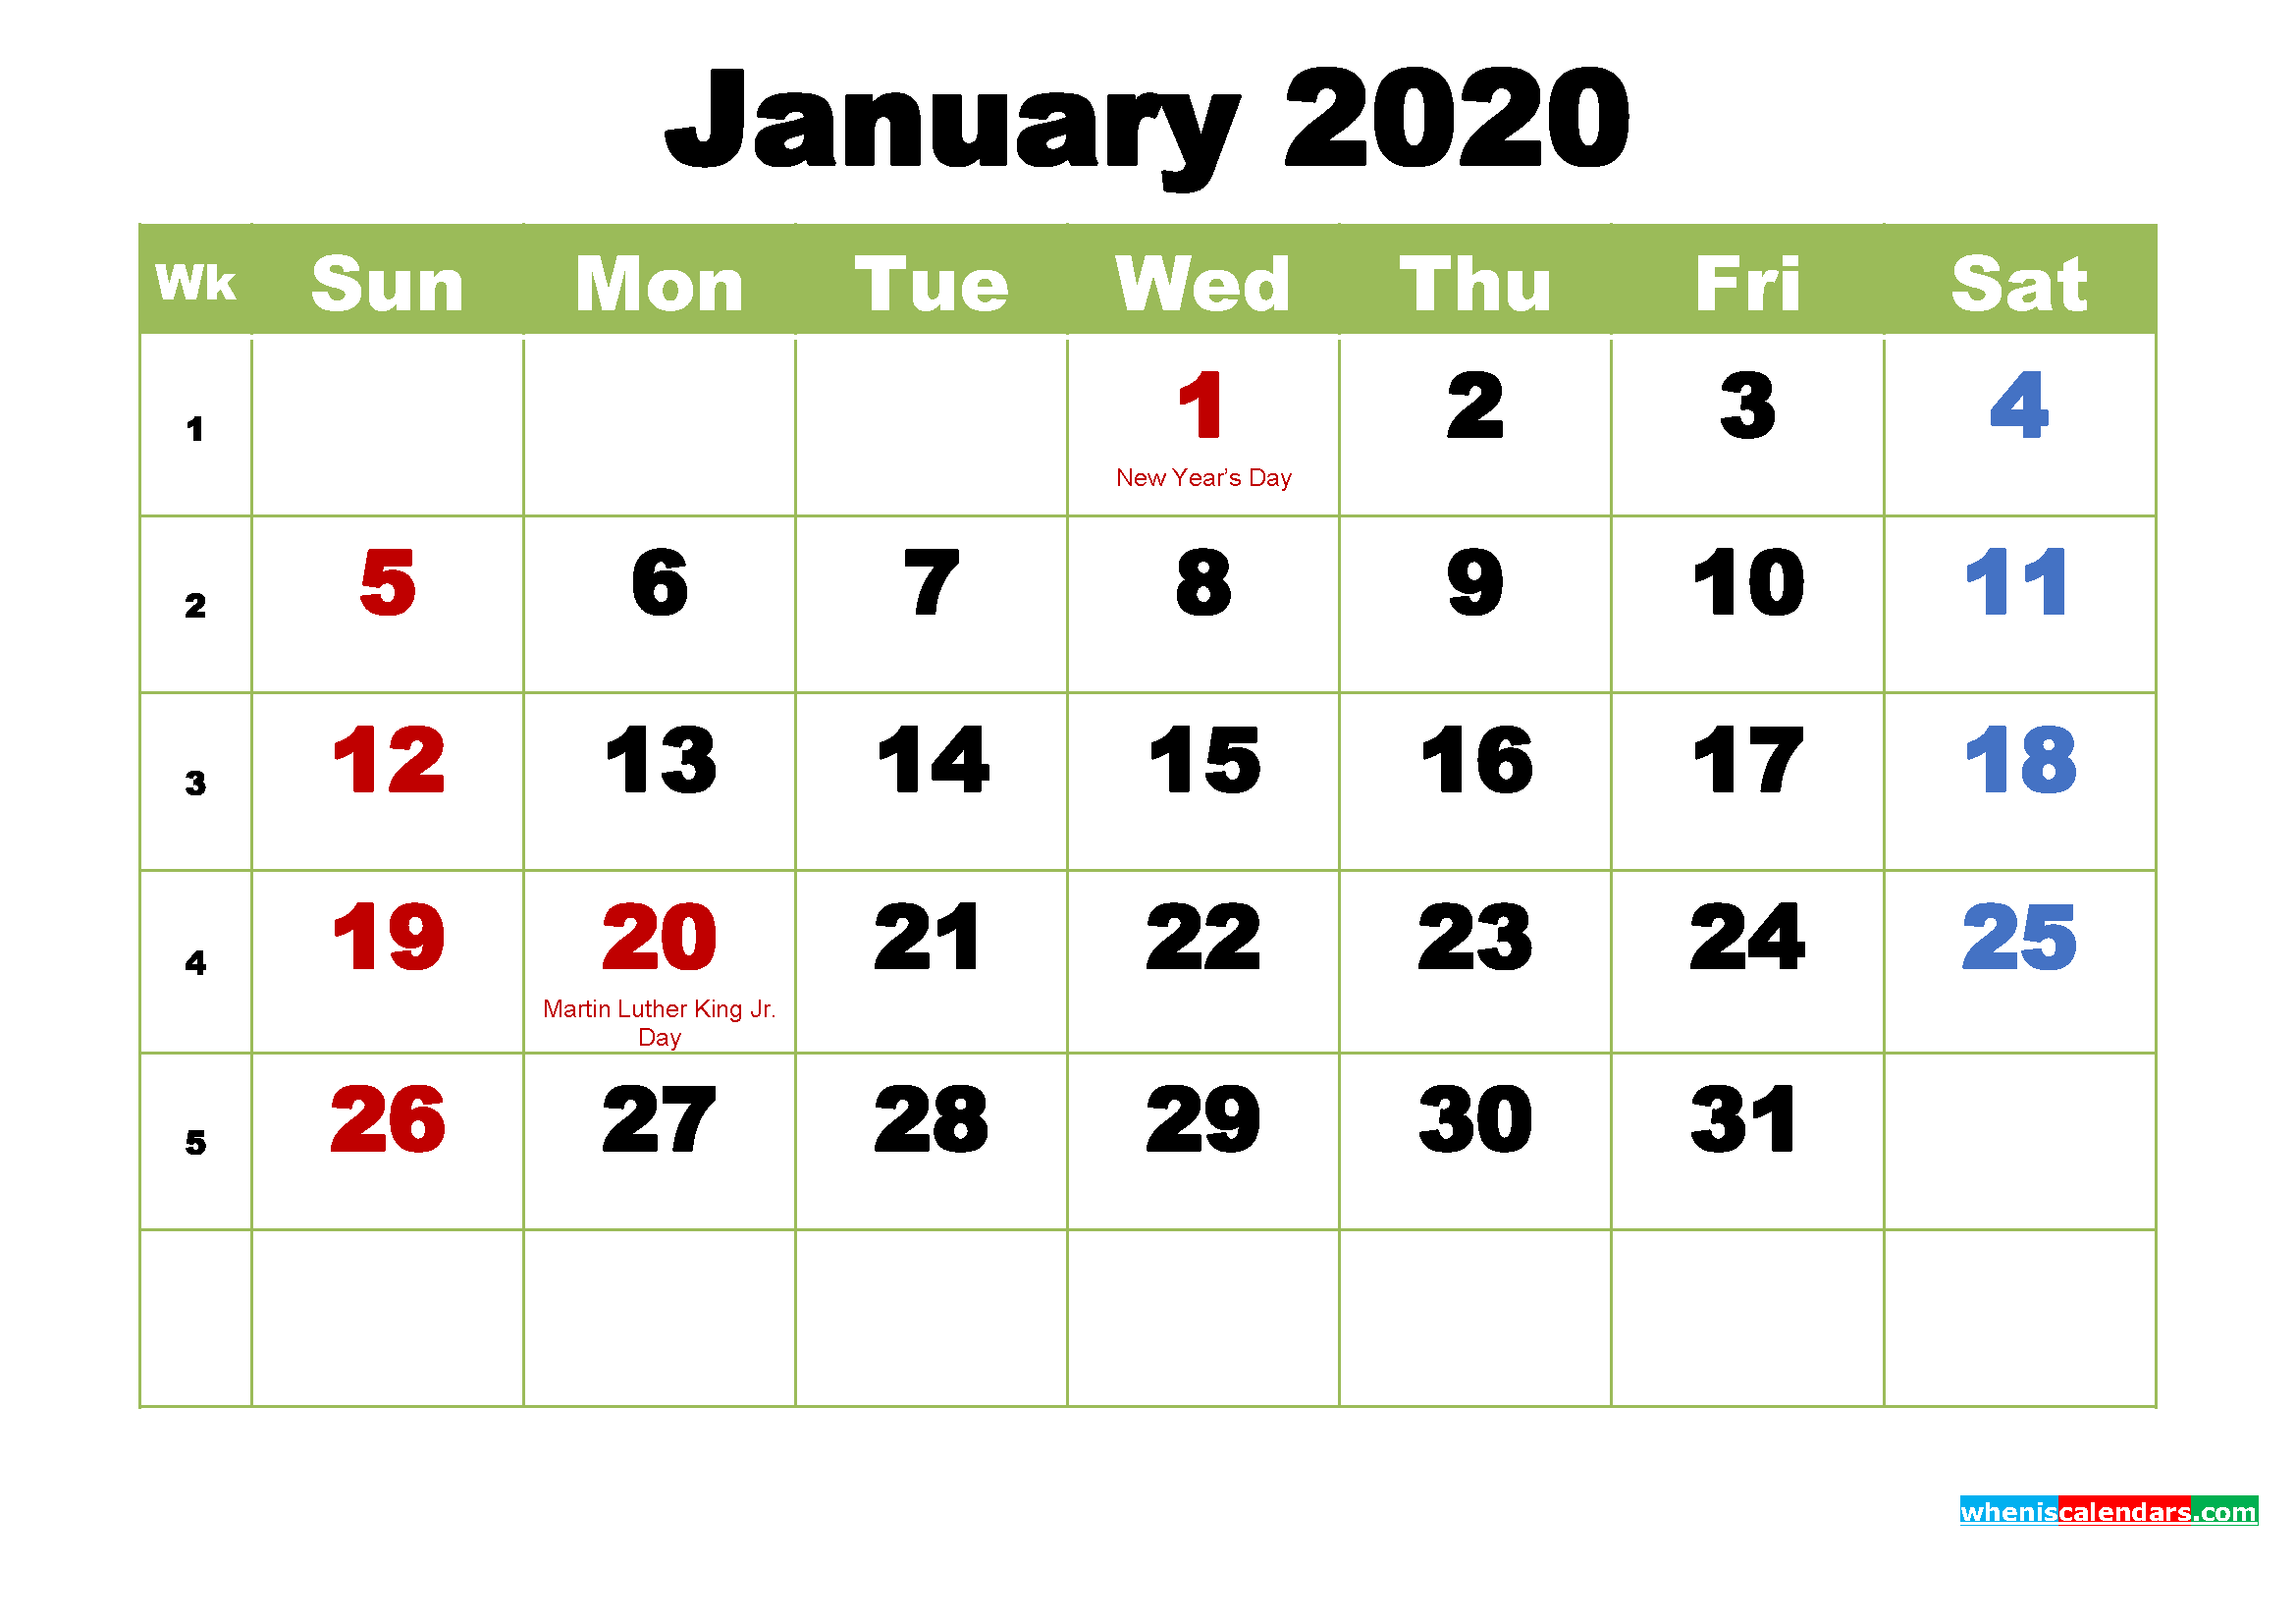 Free January 2020 Printable Calendar with Holidays